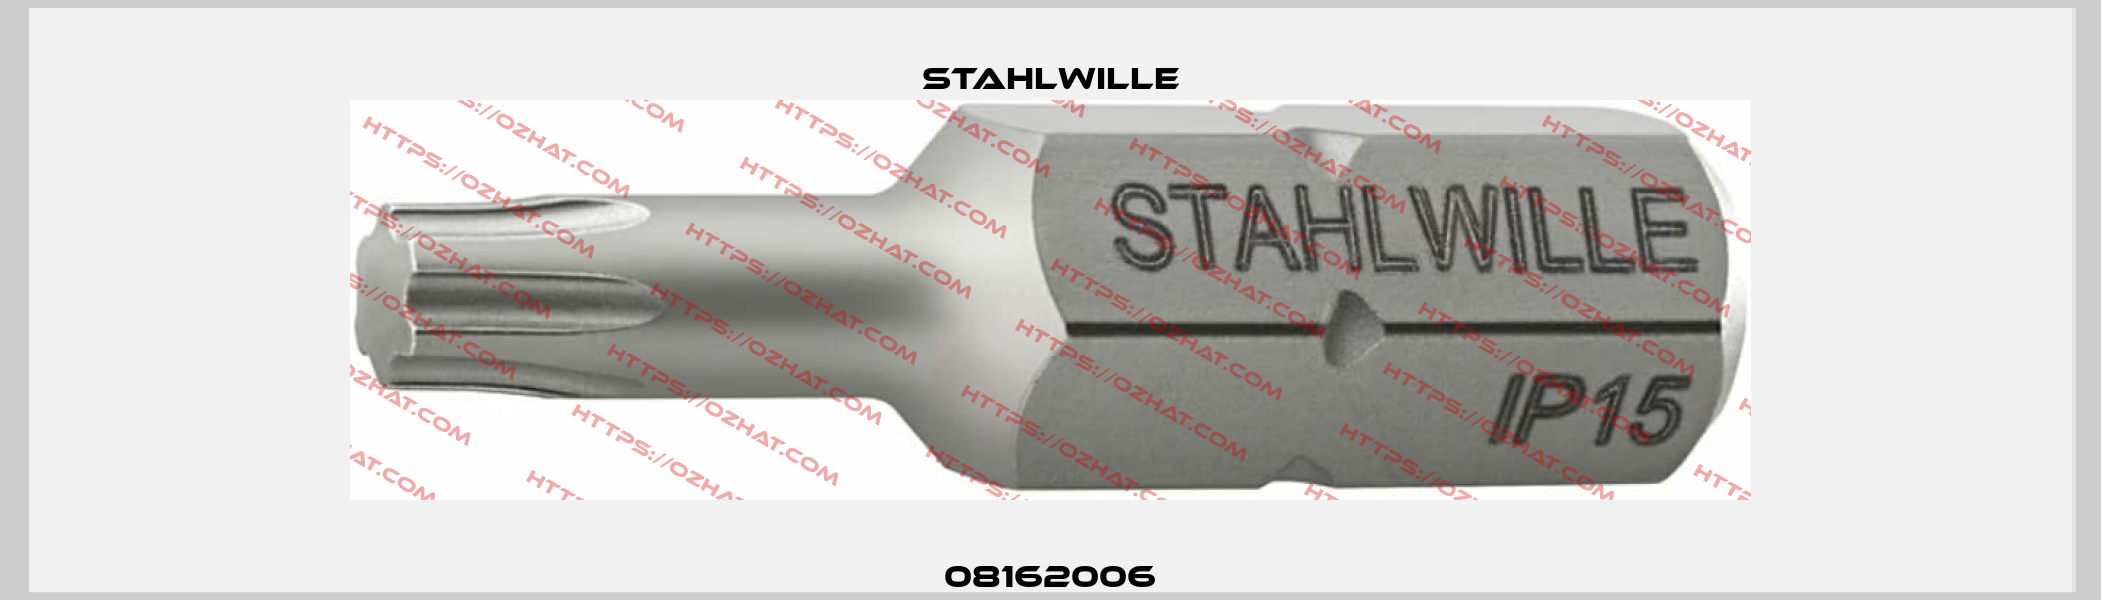 08162006 Stahlwille